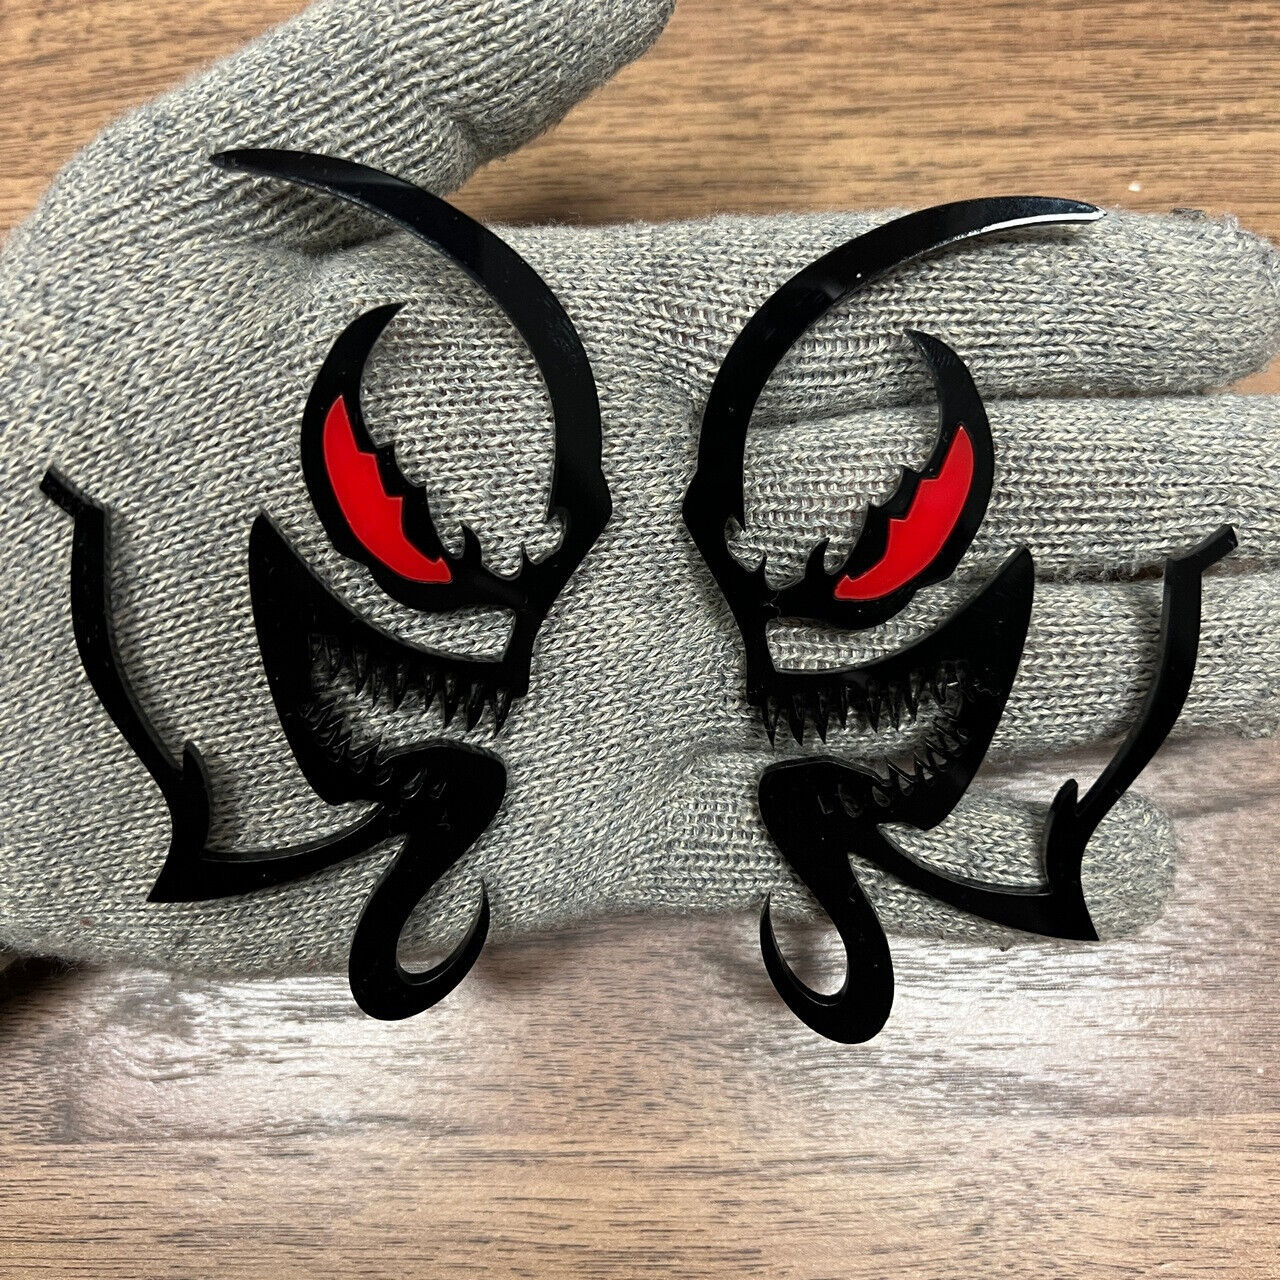 Venomous Badges Emblem Red Eye ,(2) BADGES, Fender Venom, Angry Agressive